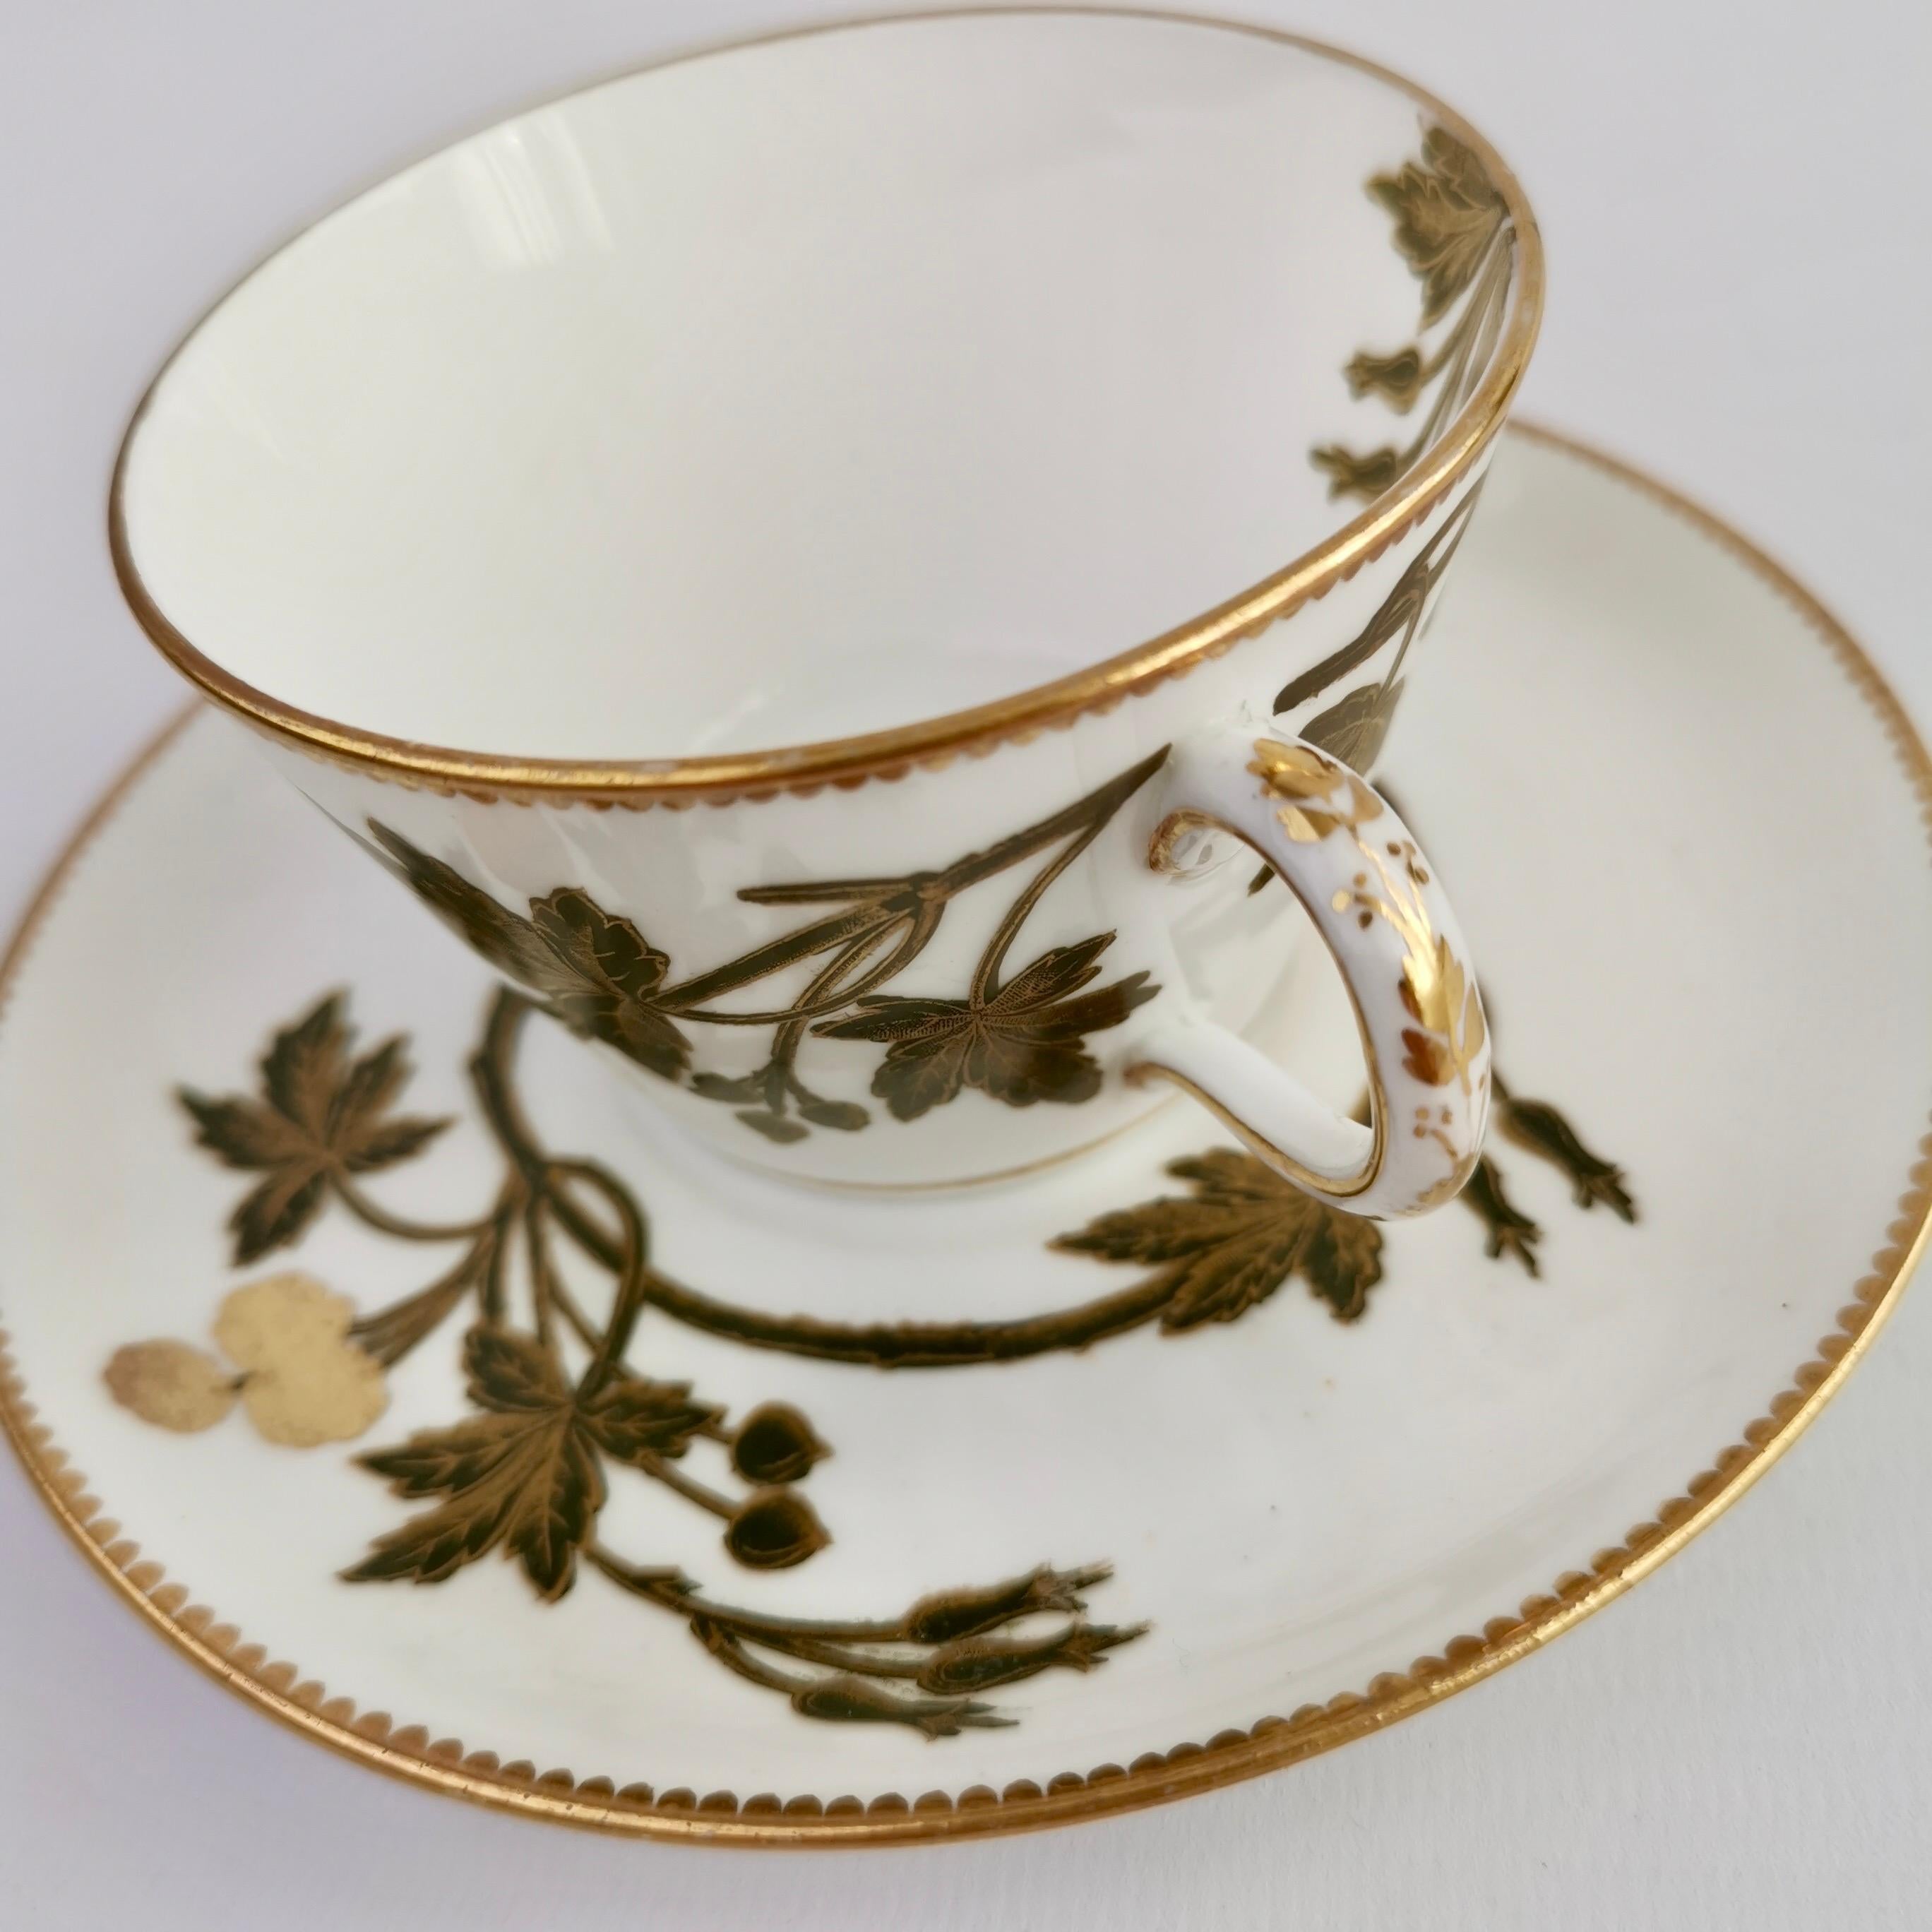 Late 19th Century English Porcelain Teacup, Aesthetic Movement Bronze-Gilt Sprigs, ca 1875